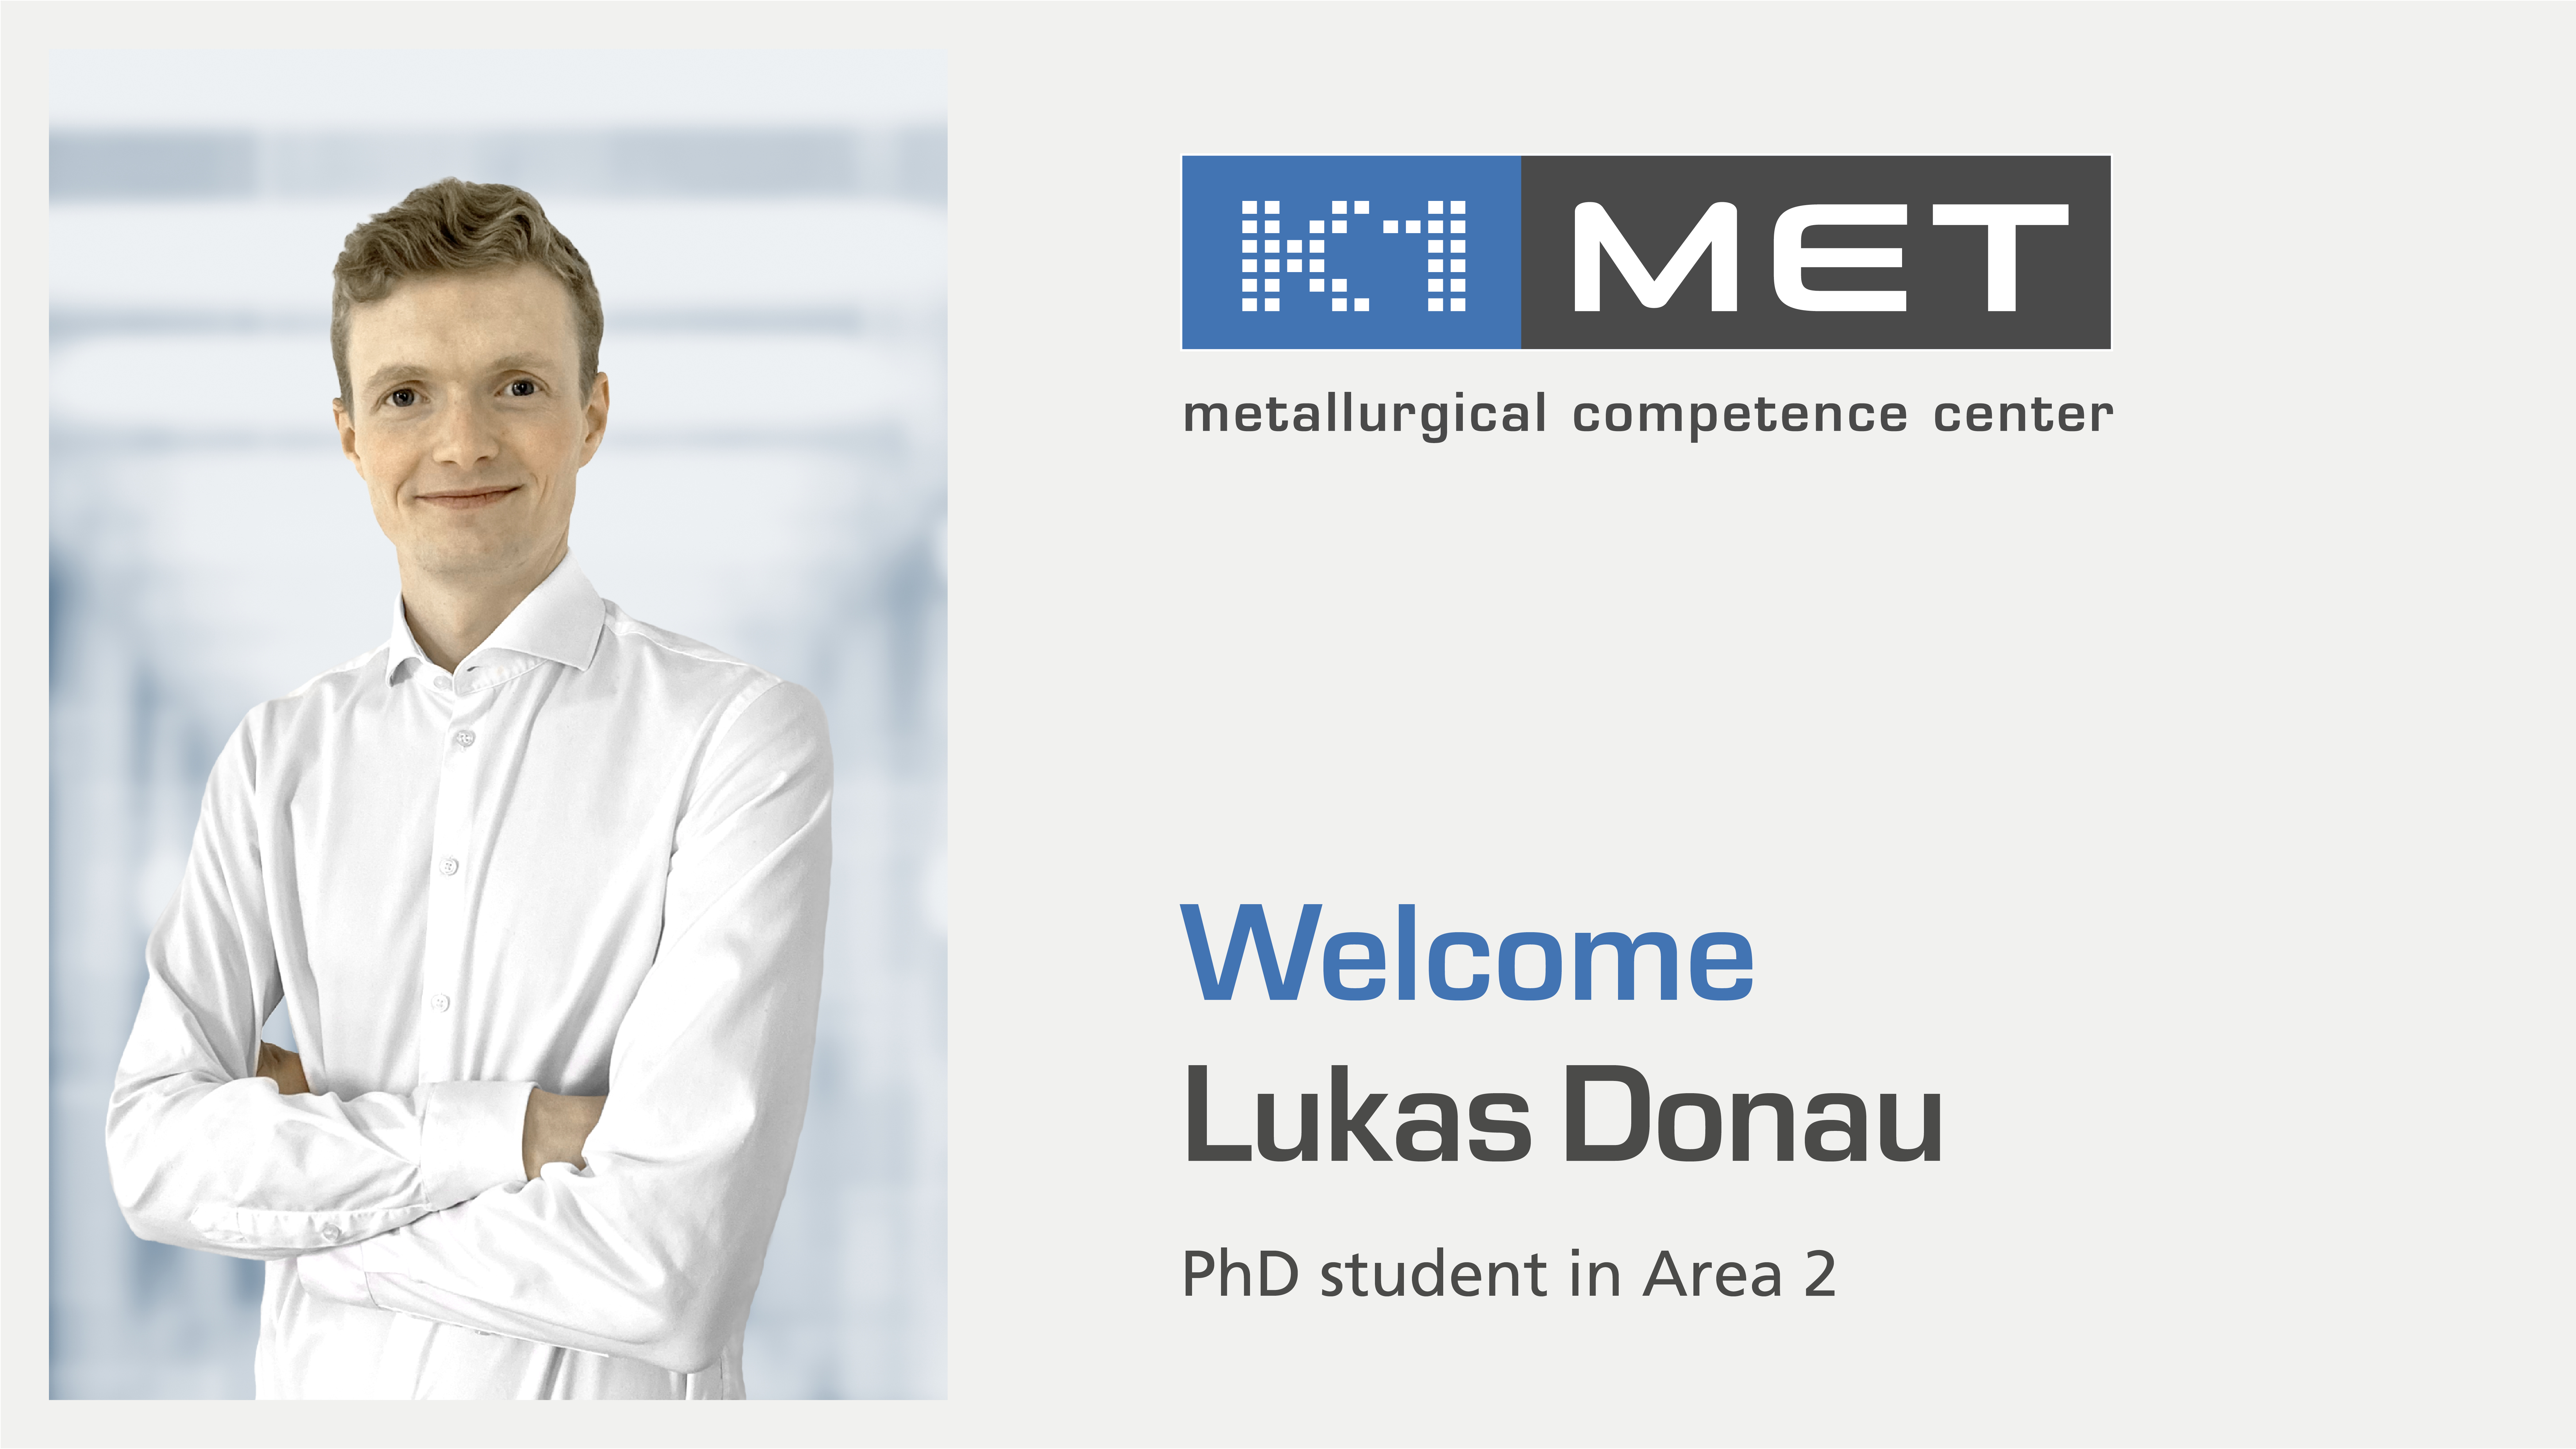 Lukas Donau, K1-MET GmbH